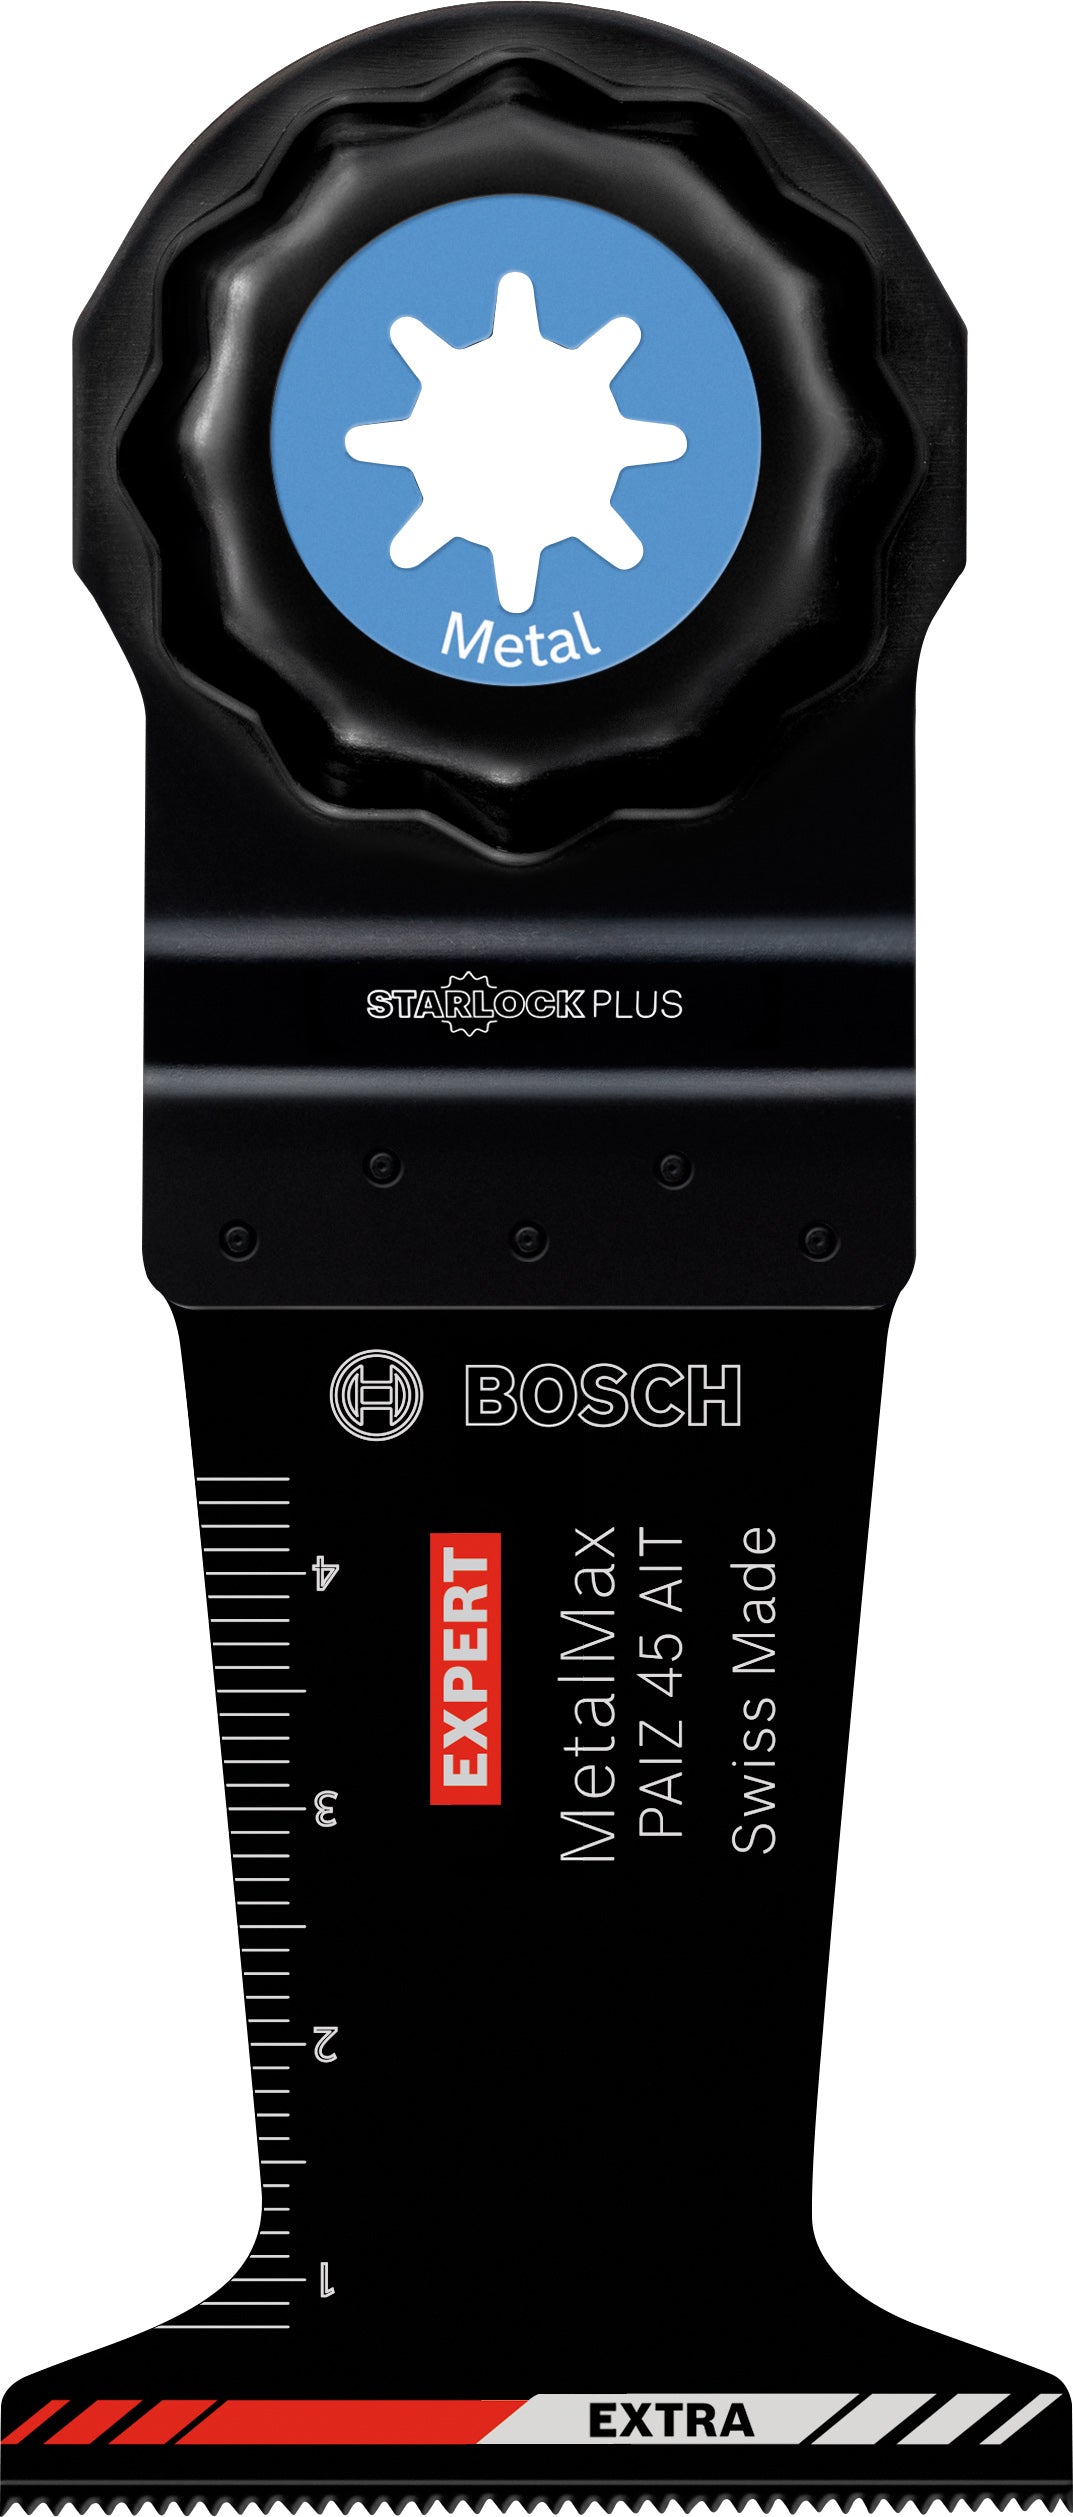 Bosch Professional StarlockPlus Coated Carbide Plunge Cut Metal Blade - PAIZ45AIT (1 piece)